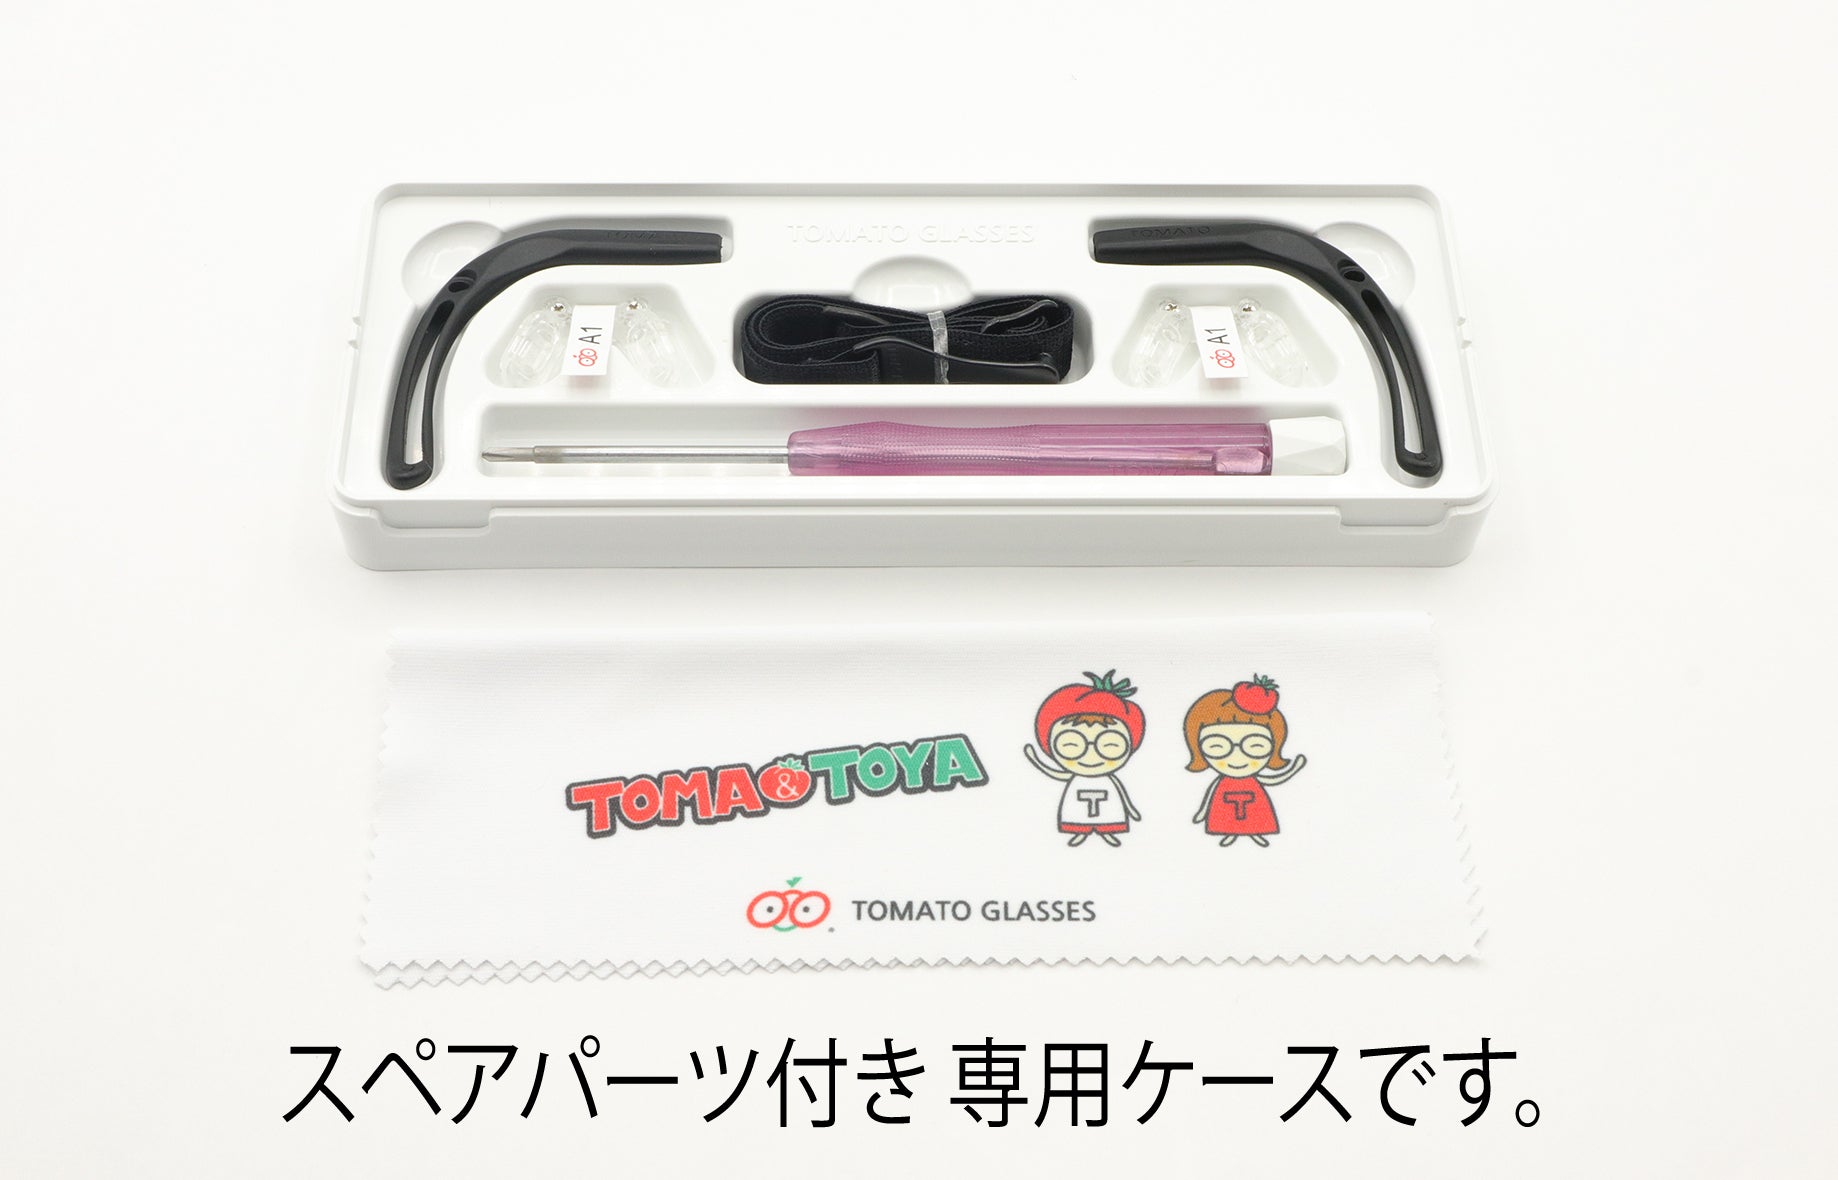 TOMATO GLASSES(トマトグラッシーズ) TKDC17ブラウン(44サイズ)